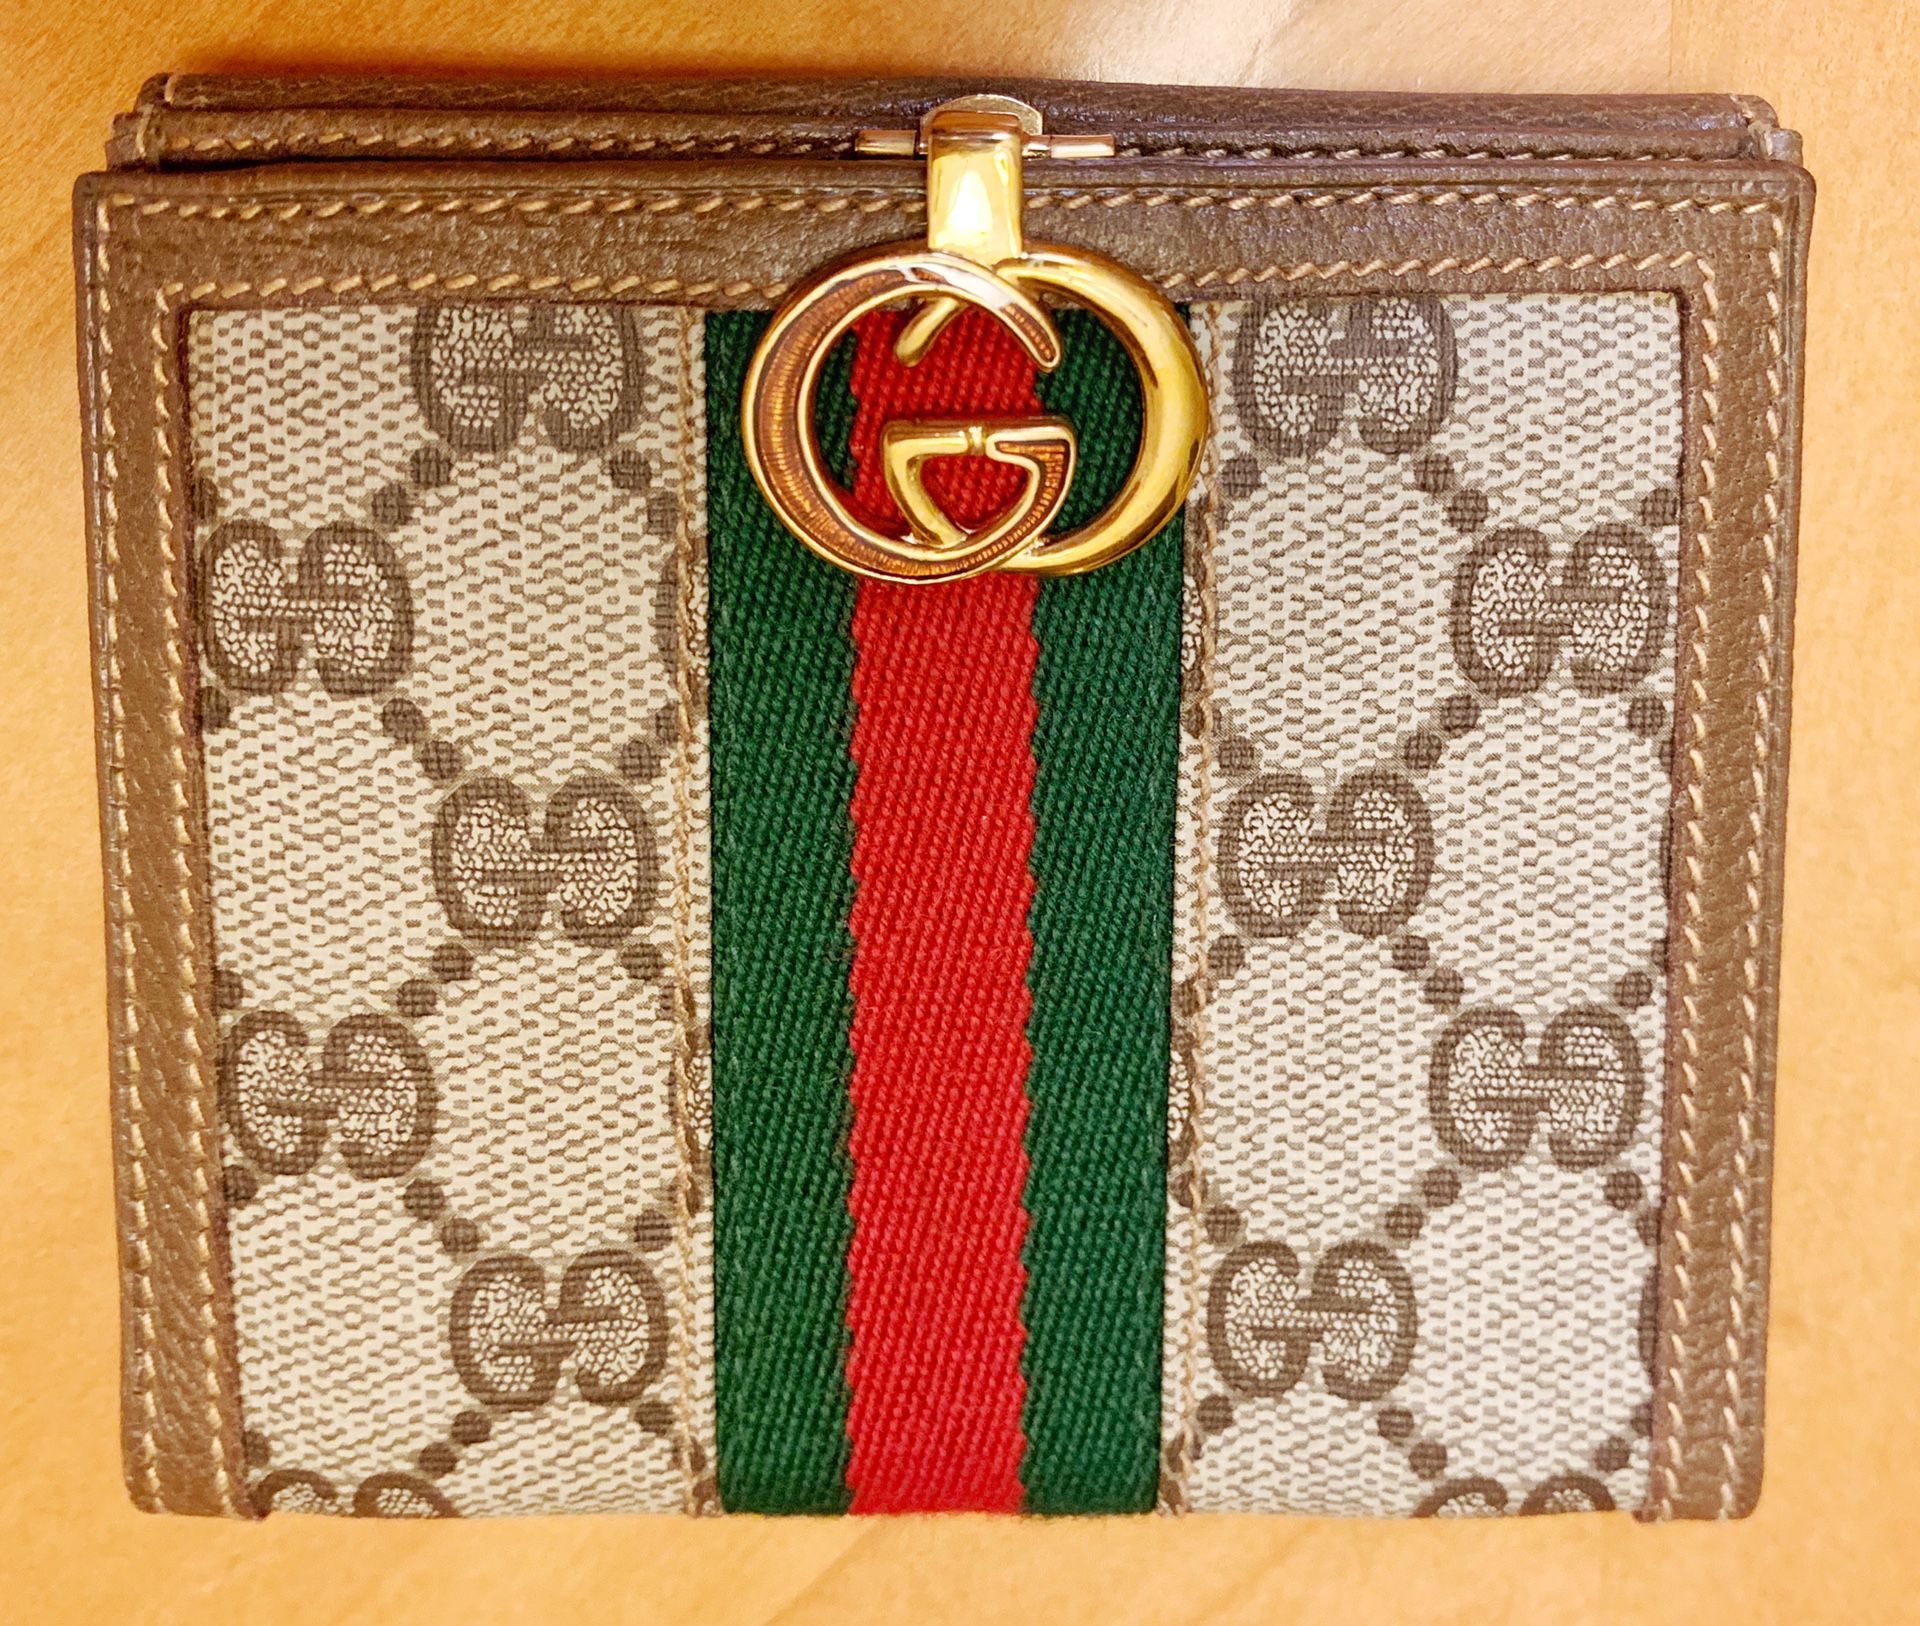 New Authentic Gucci GG Monogram Flip Wallet